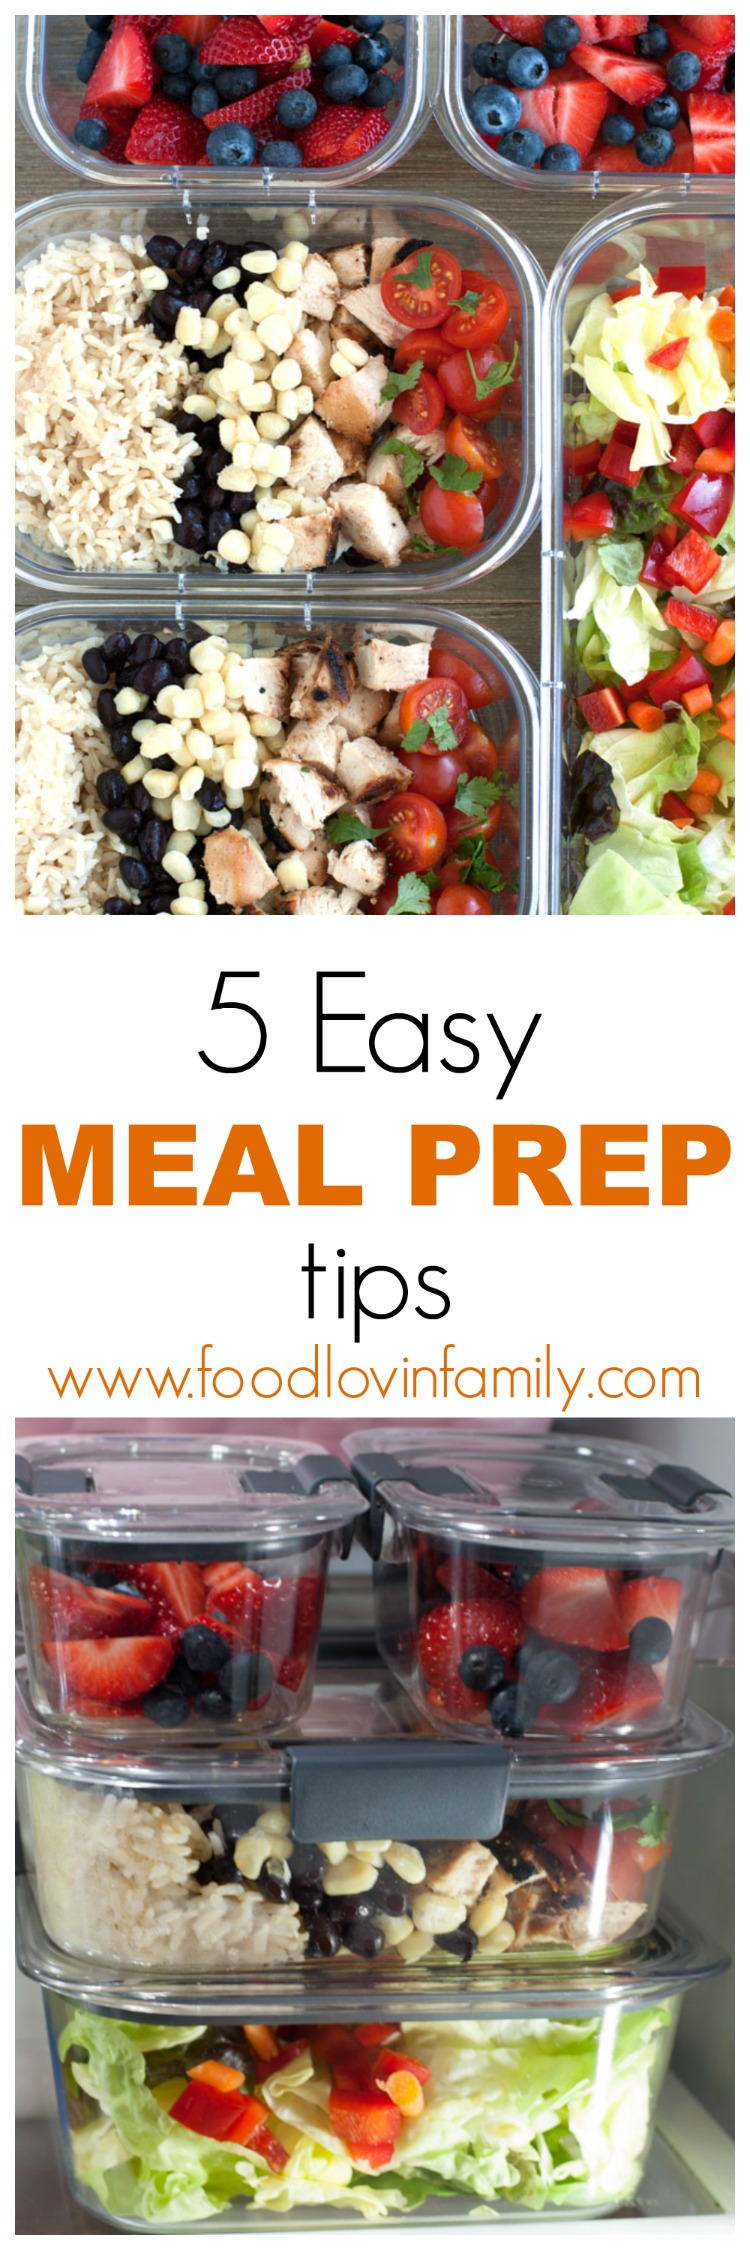 5 easy meal prep tips